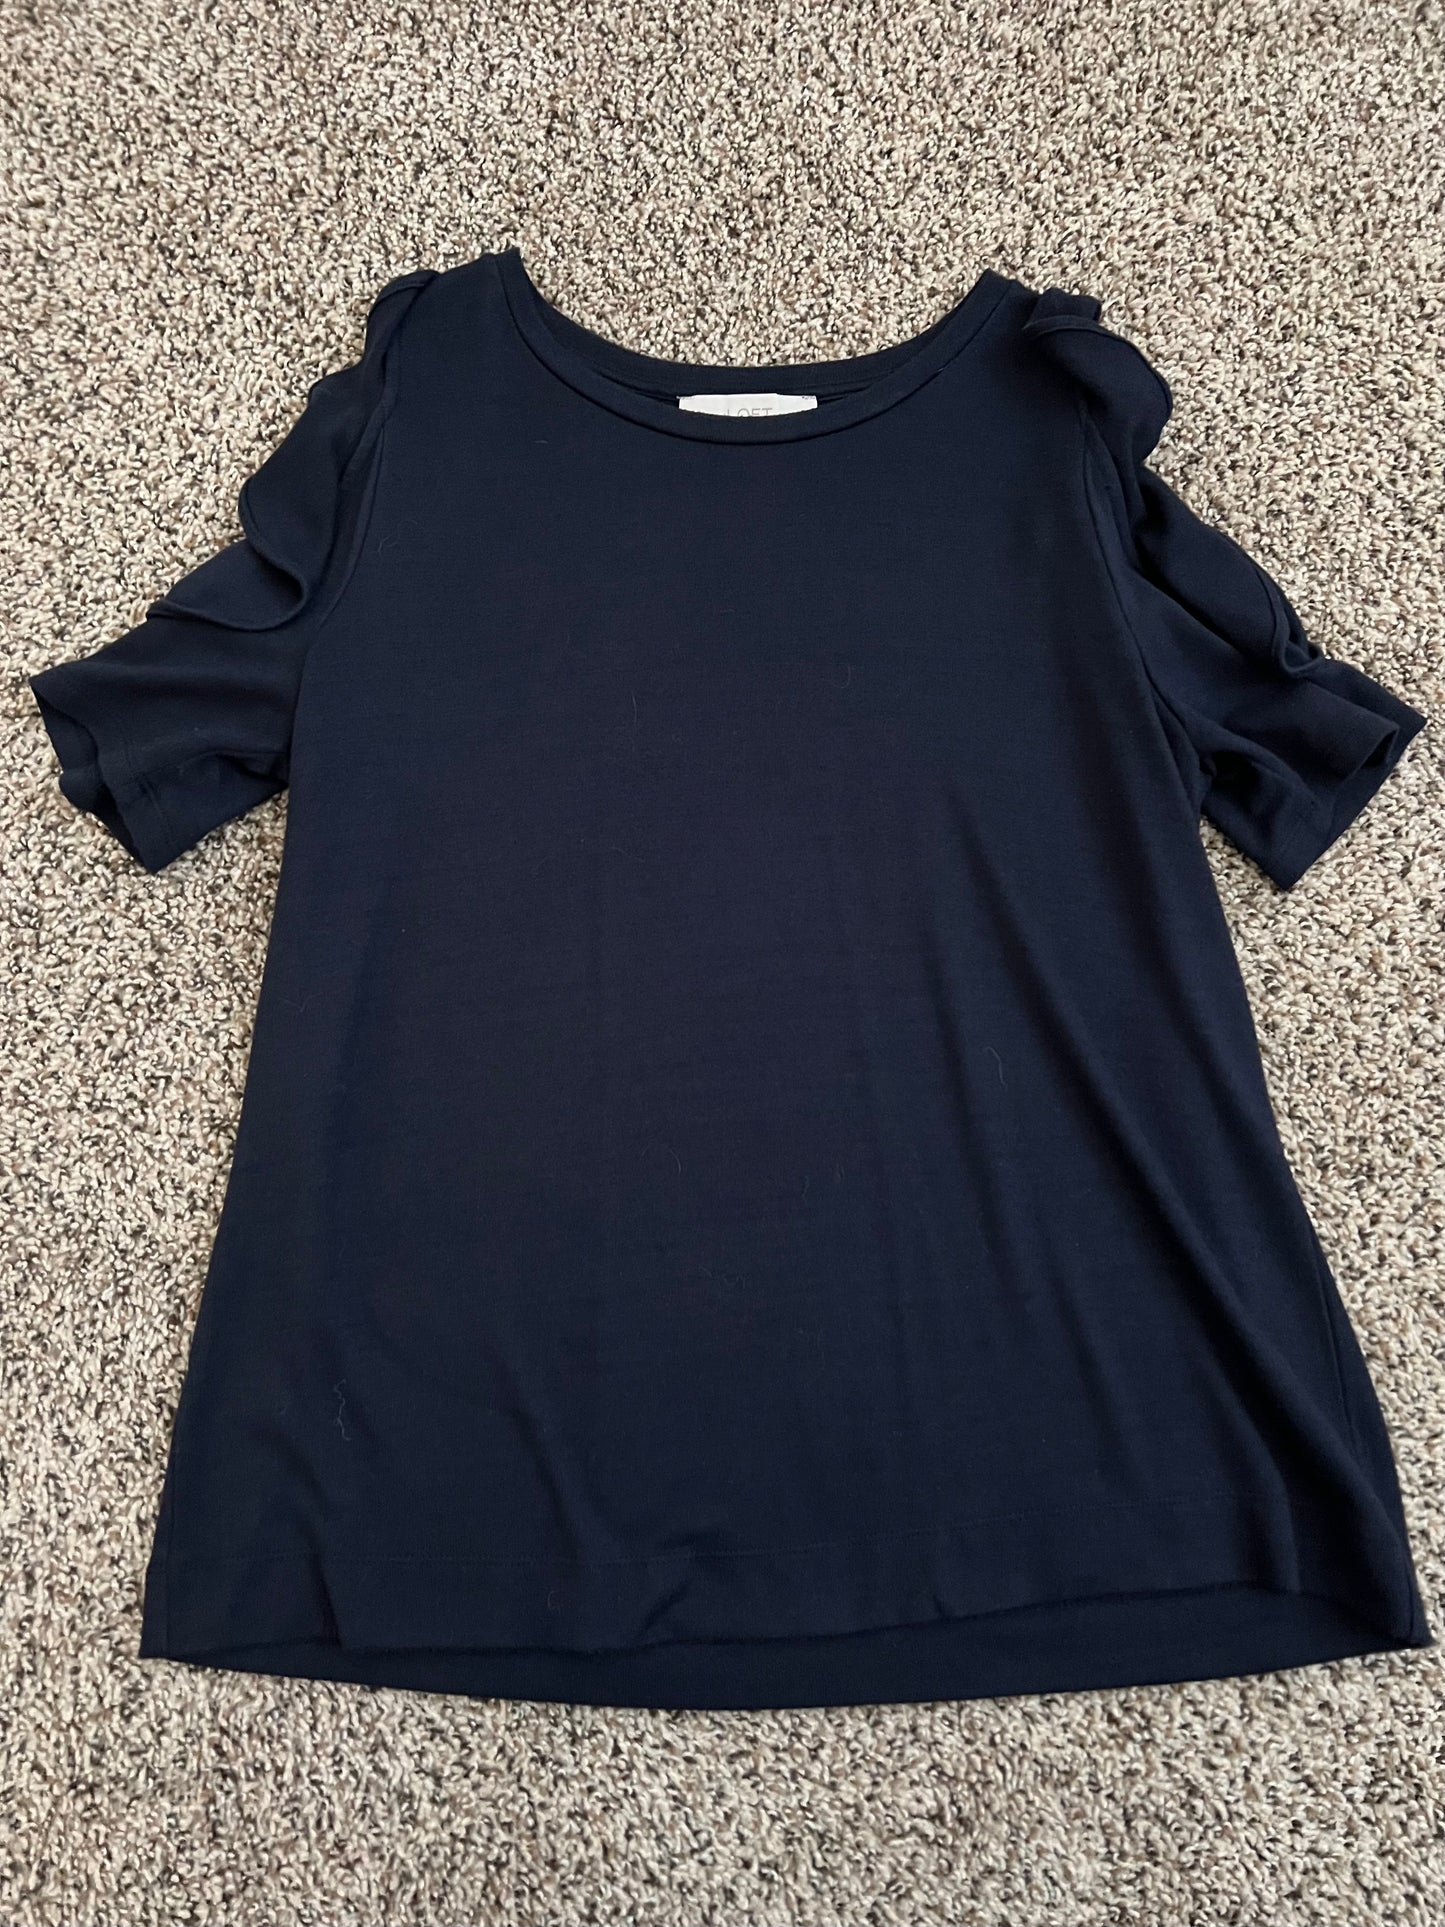 Women’s Medium Shirt - VGUC - Navy Cold shoulder